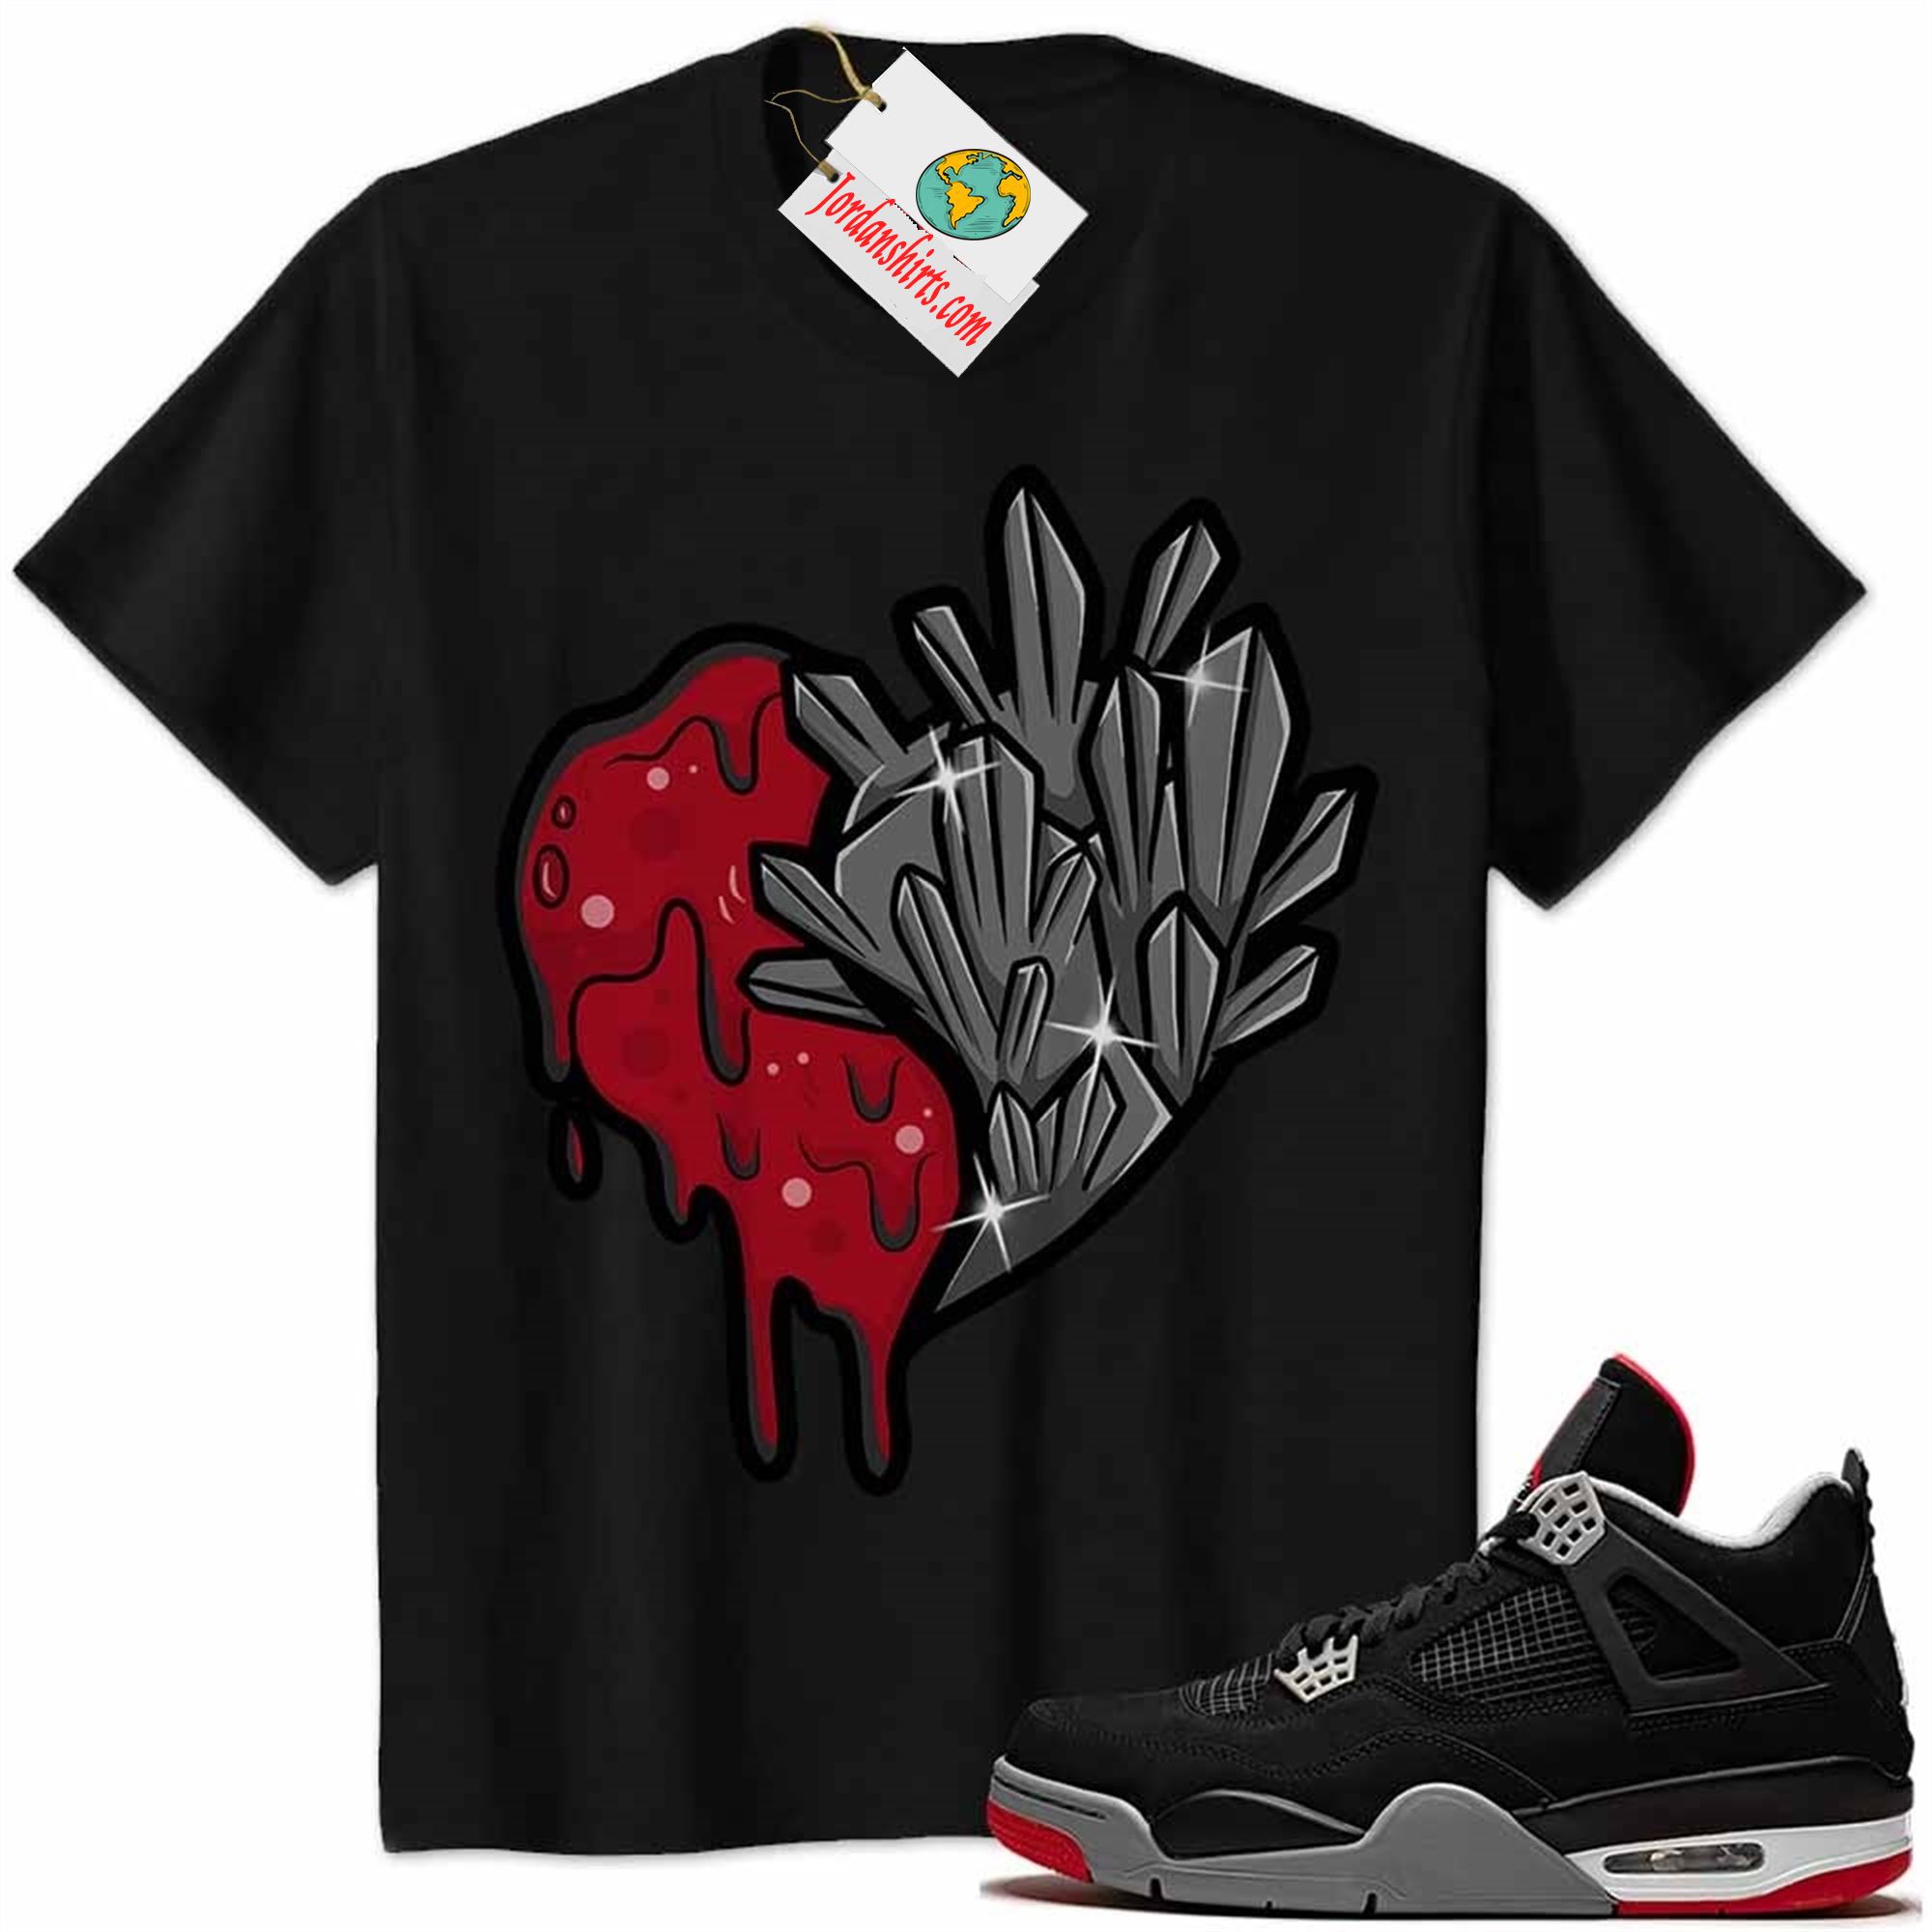 Jordan 4 Shirt, Crystal And Melt Heart Black Air Jordan 4 Bred 4s Size Up To 5xl